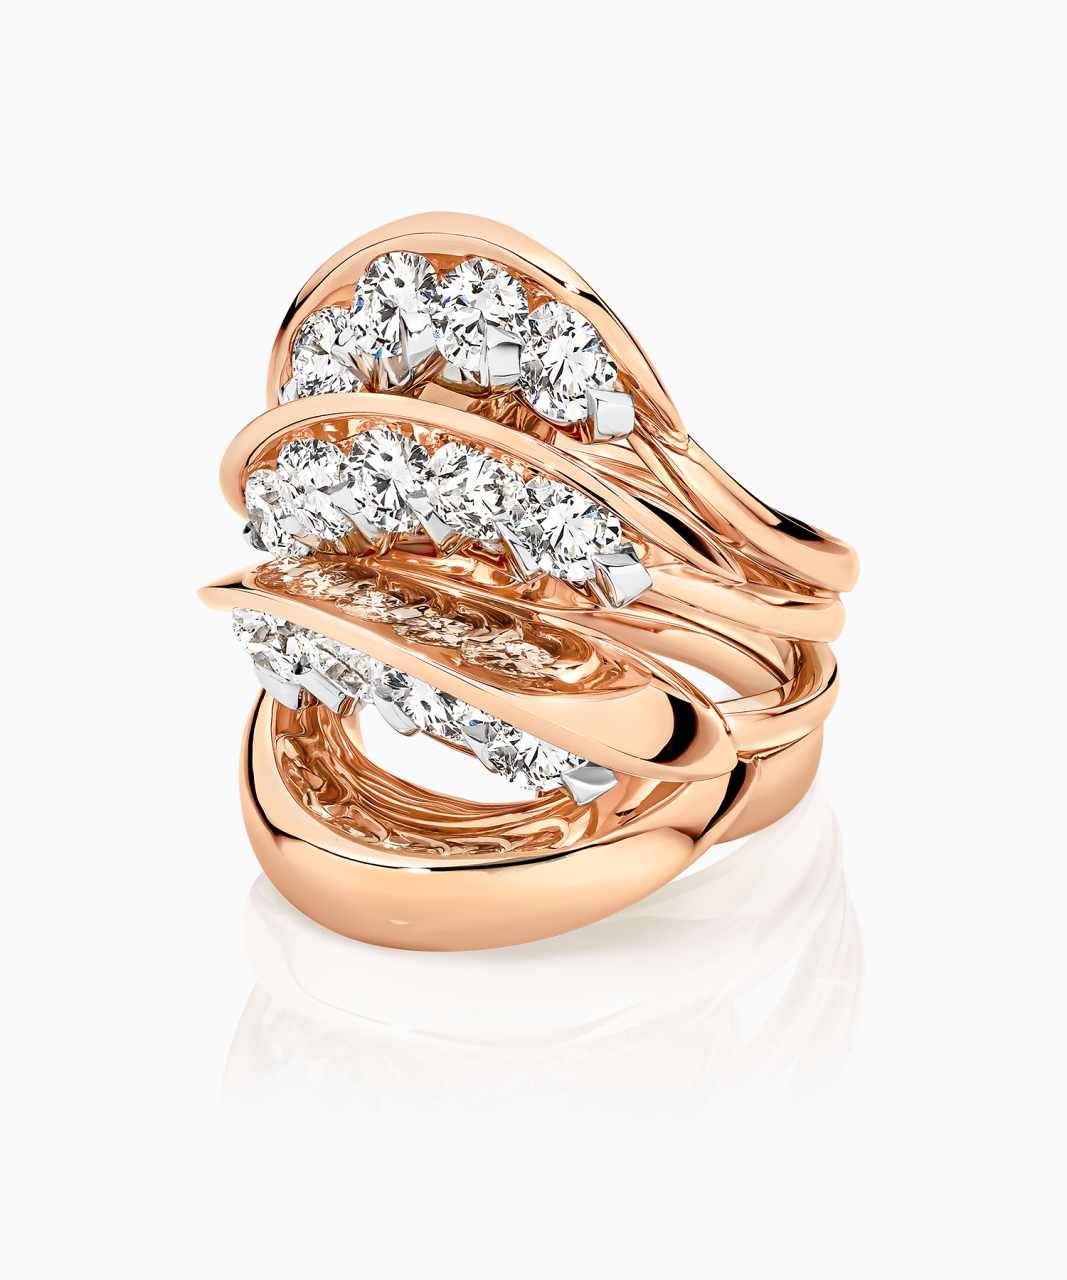 Bloom Award Winning Diamond Ring